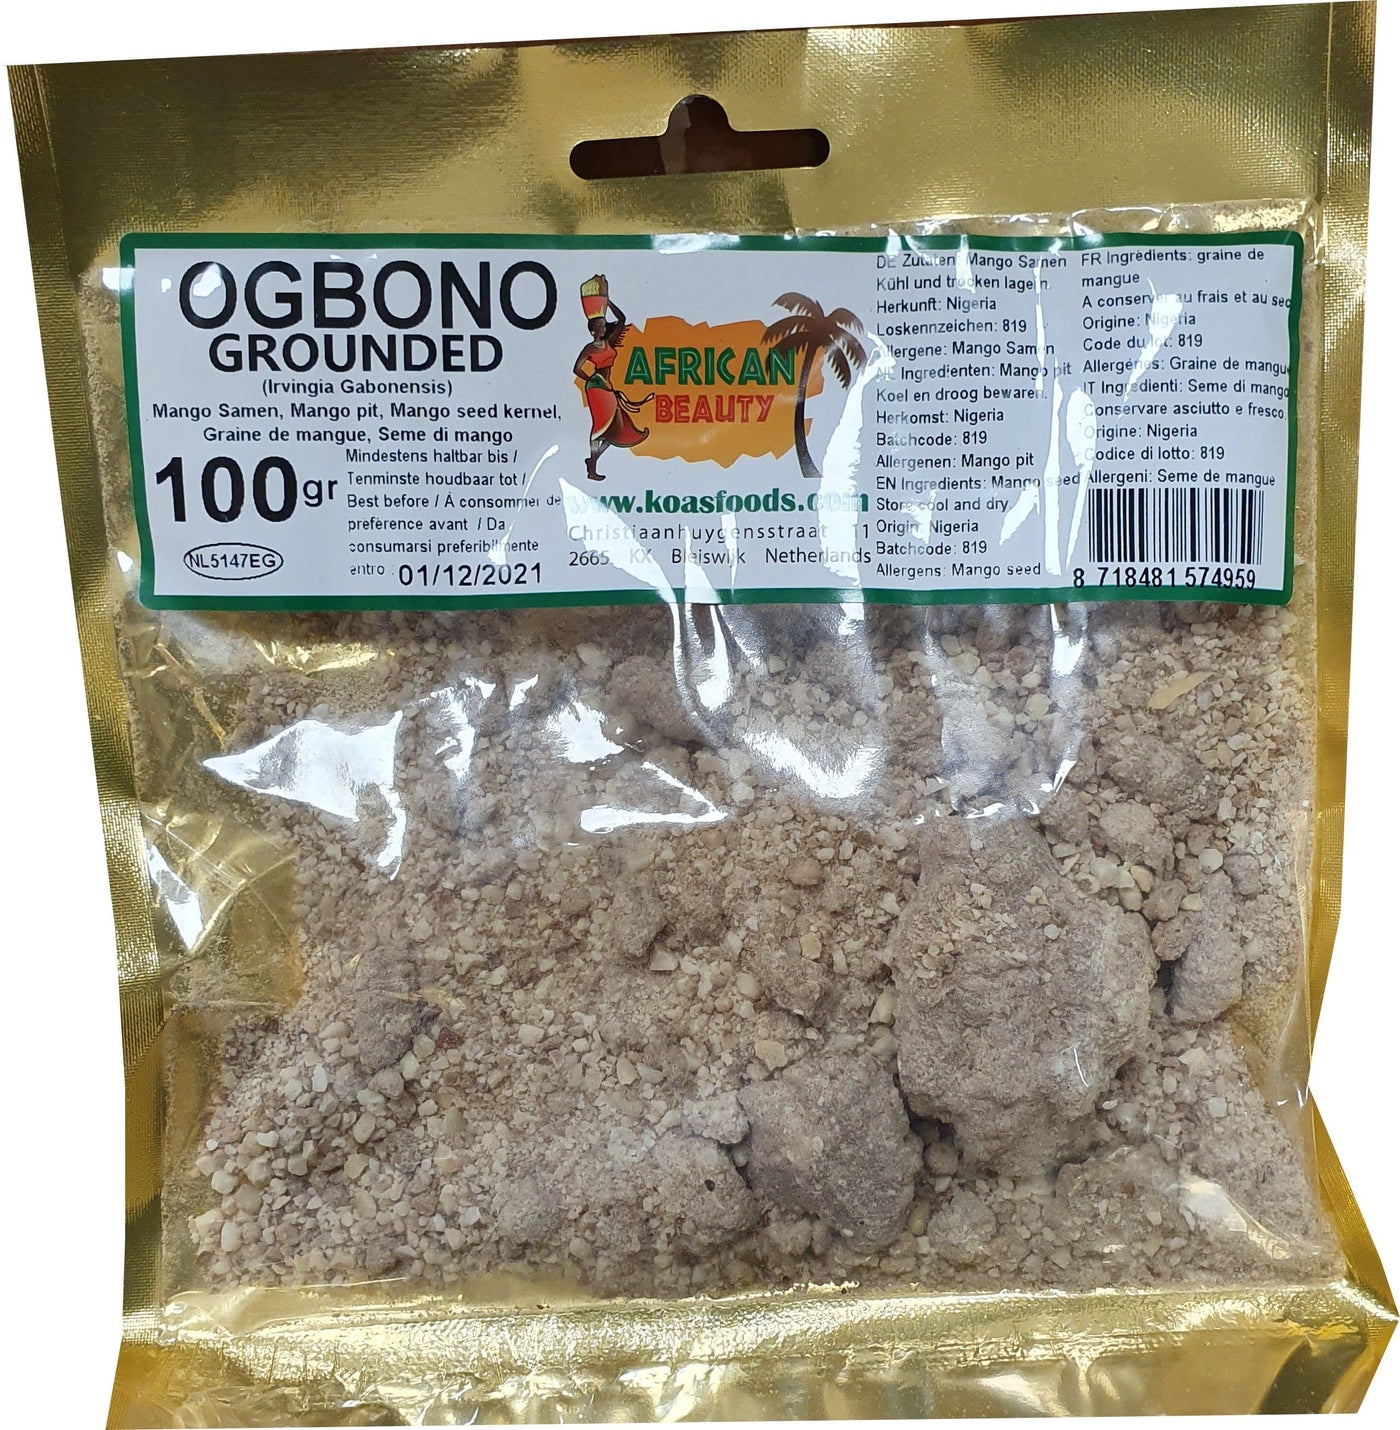 Nigeria Grounded Ogbono 100g